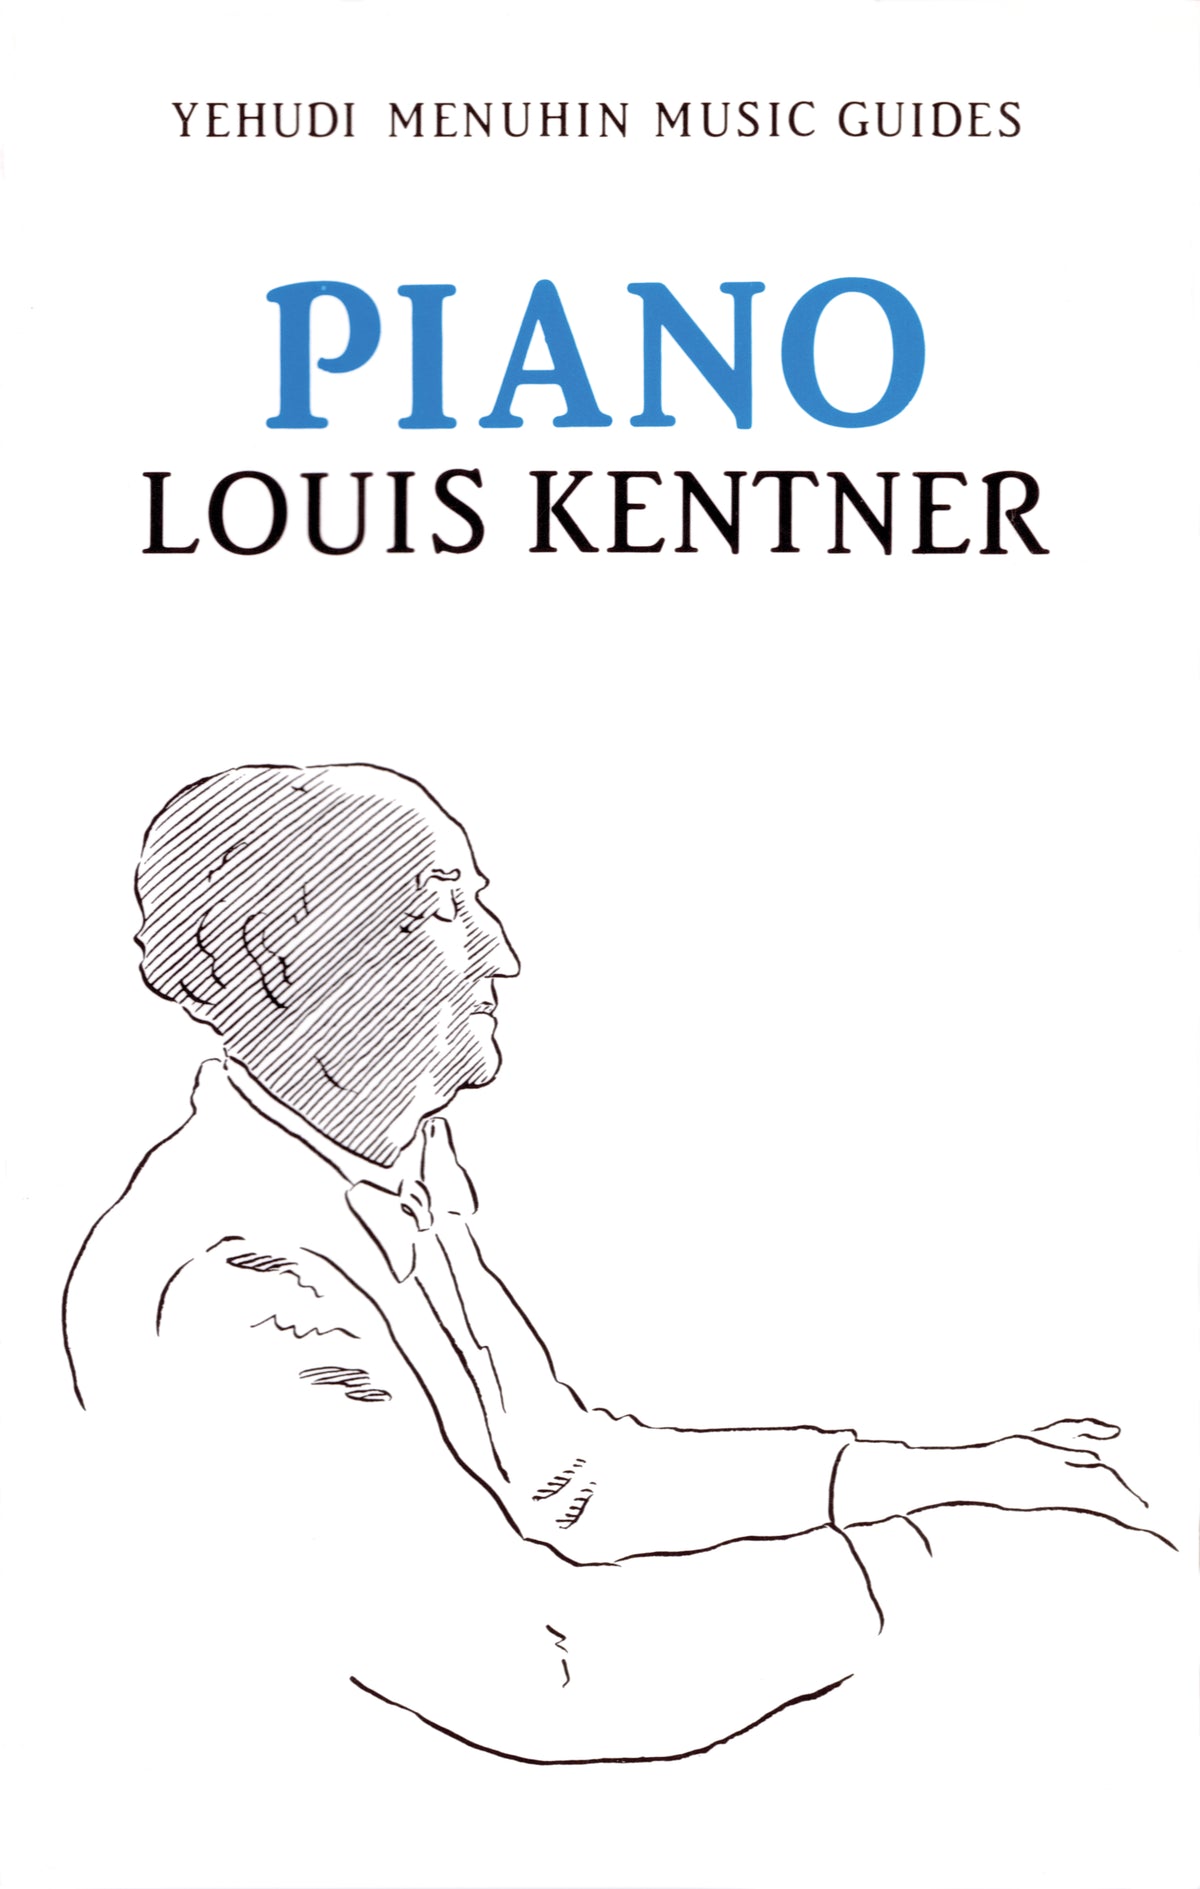 Piano (Yehudi Menuhin Music Guides)